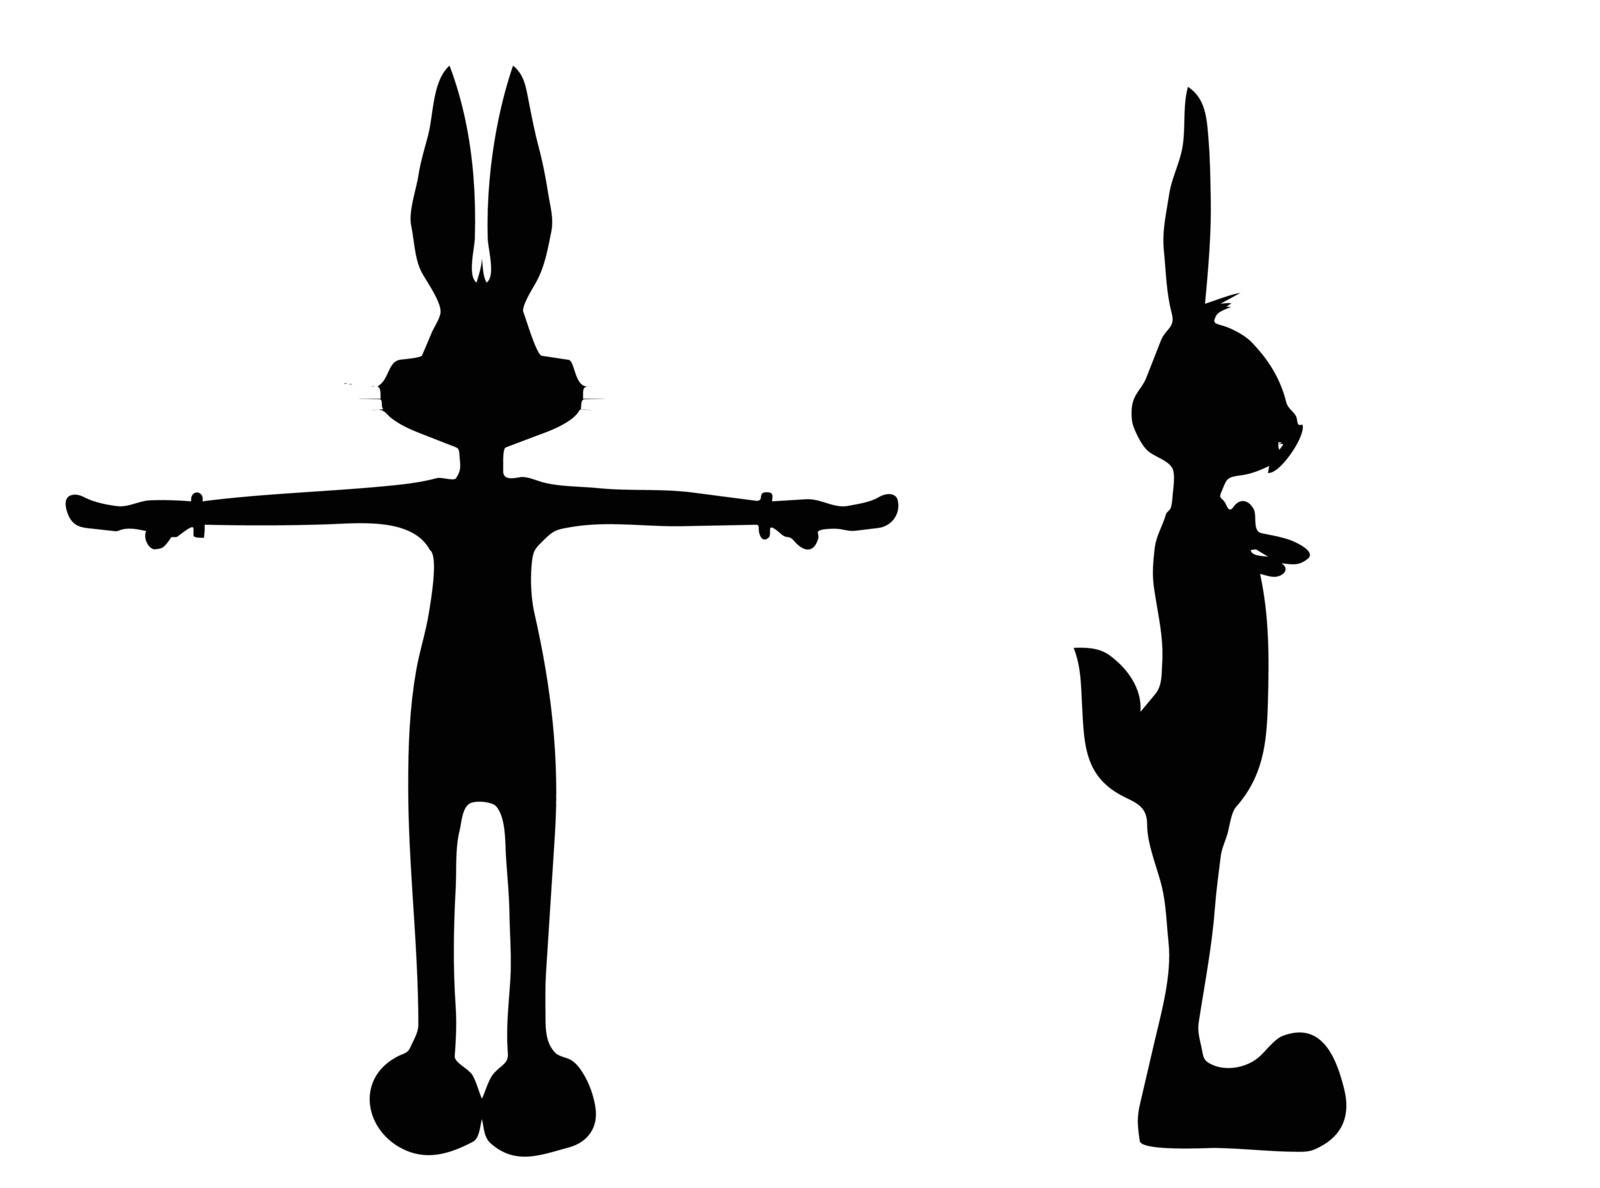 EPS 10 vector illustration of Cartoon bunny silhouette